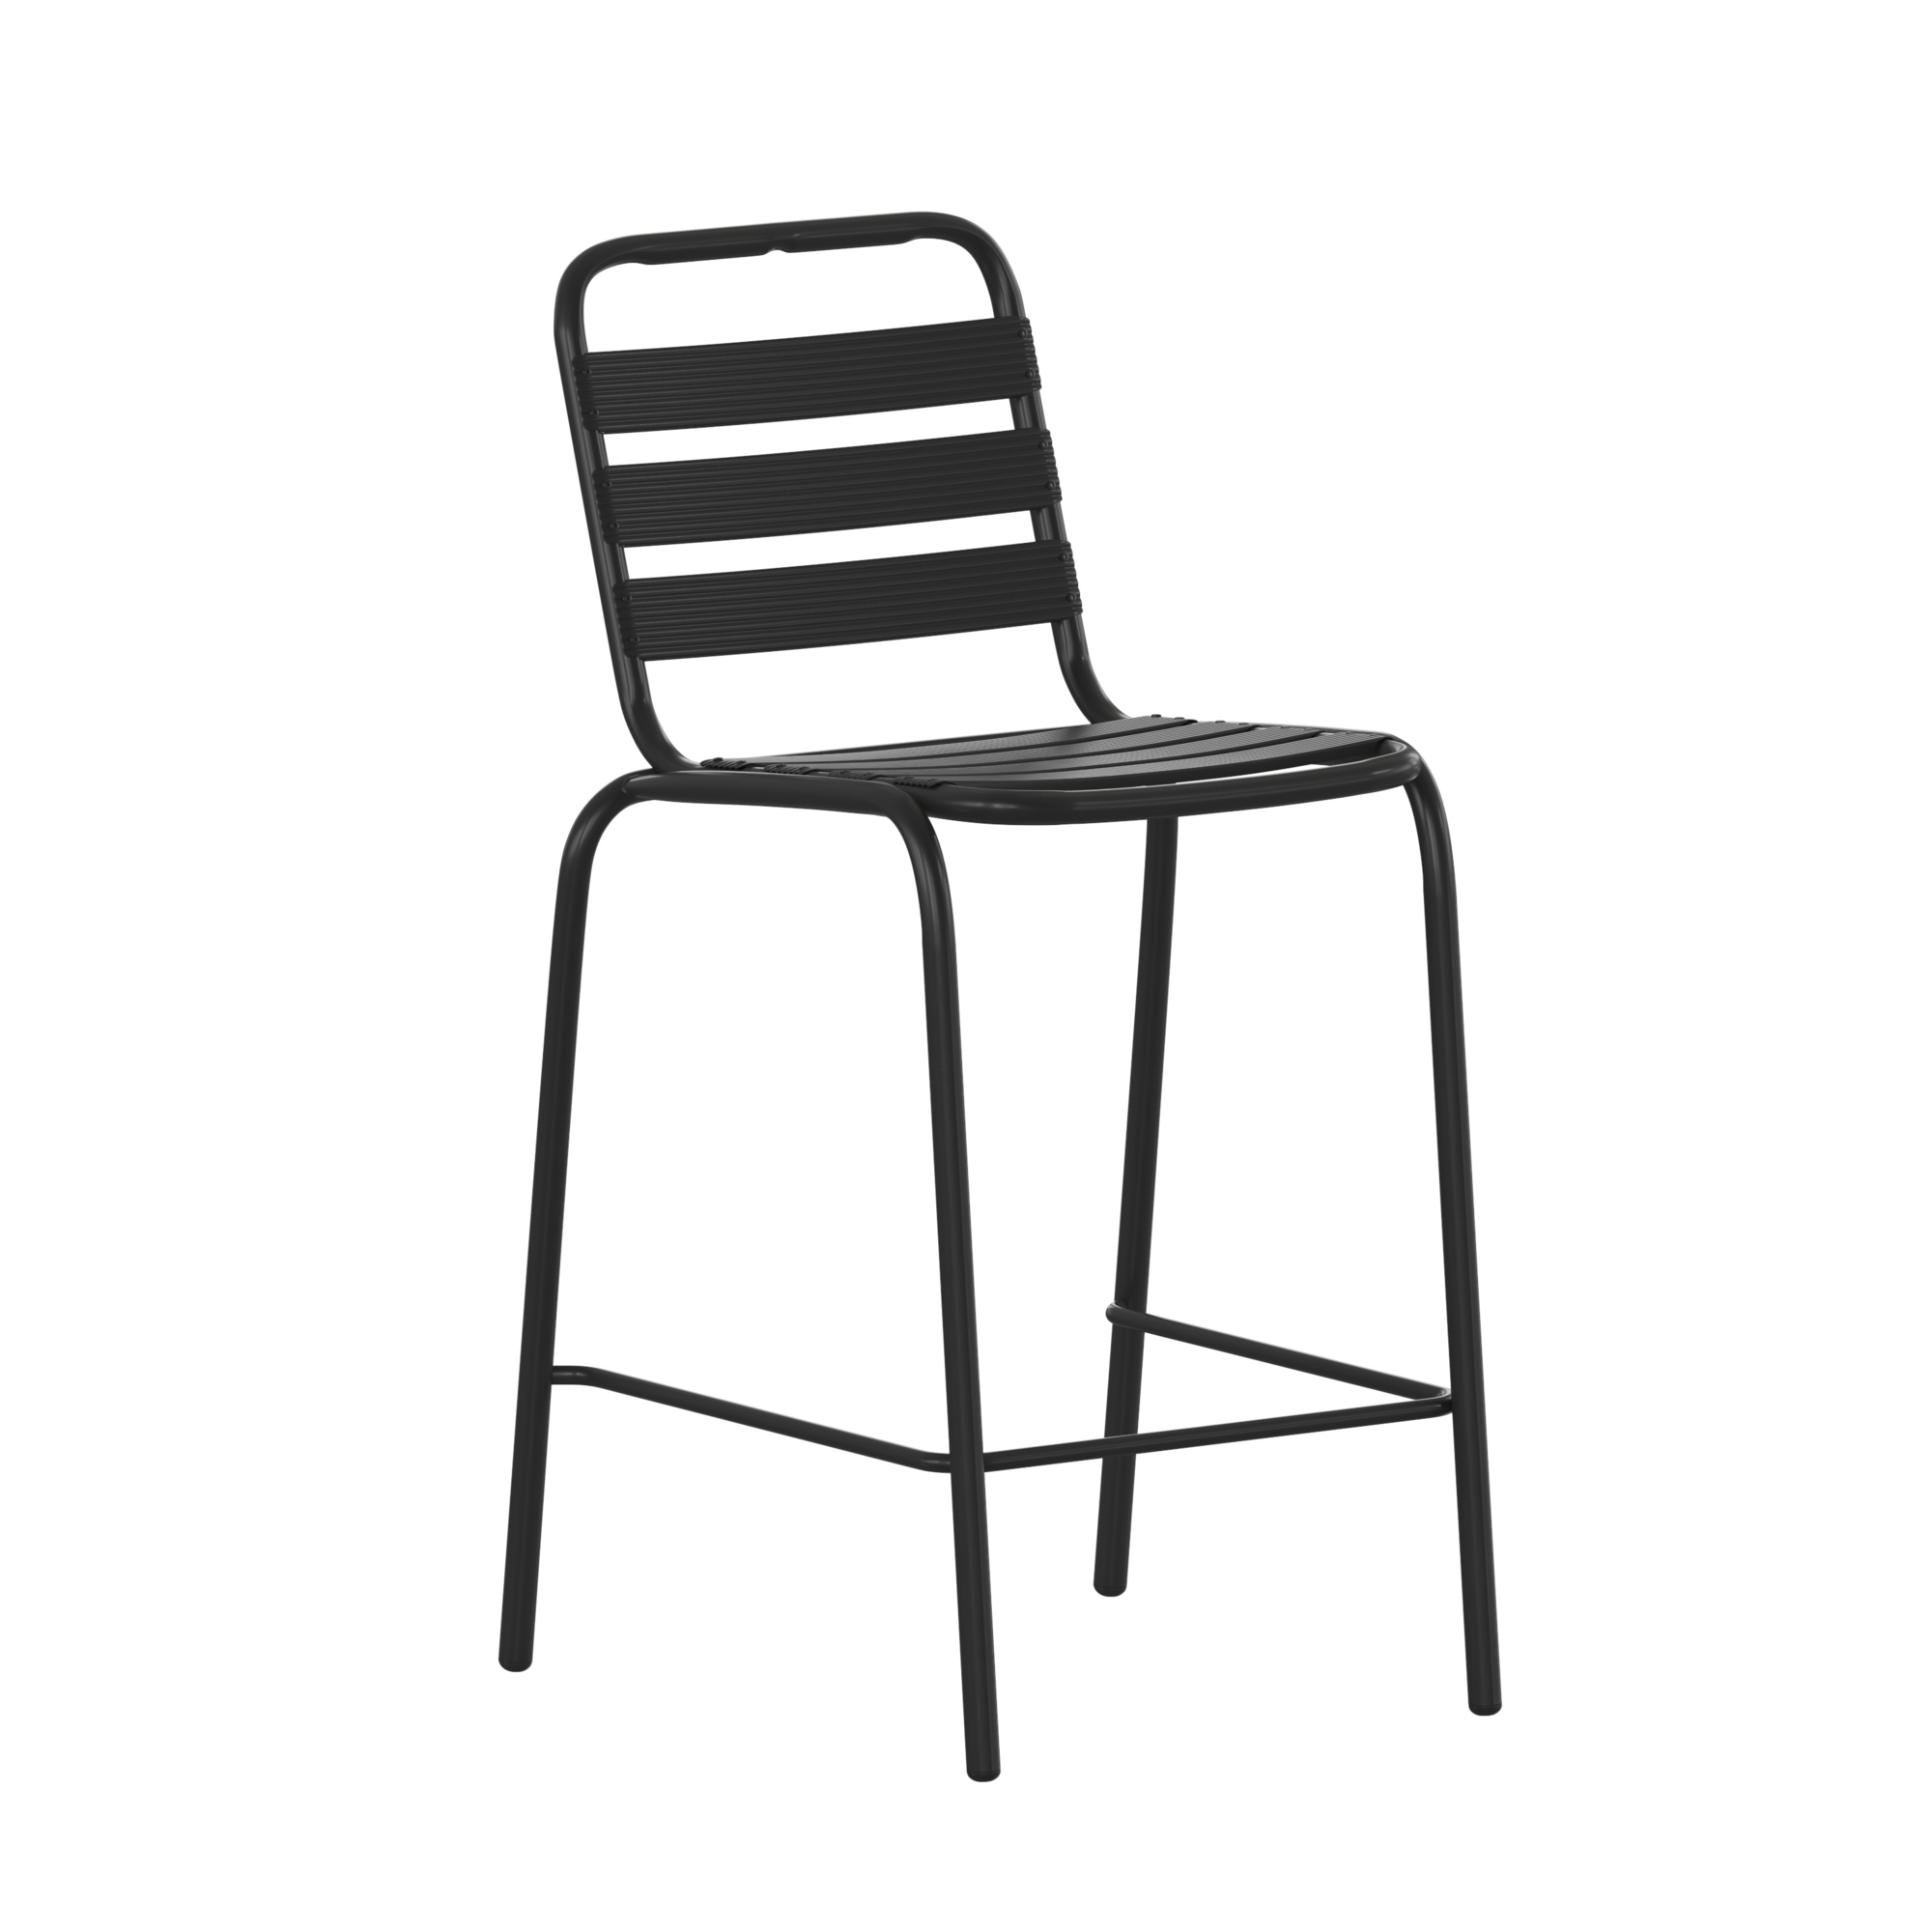 Flash Furniture, Commercial Black Restaurant Stack Stool, Primary Color Black, Material Aluminum, Width 22.75 in, Model TLH015HBK